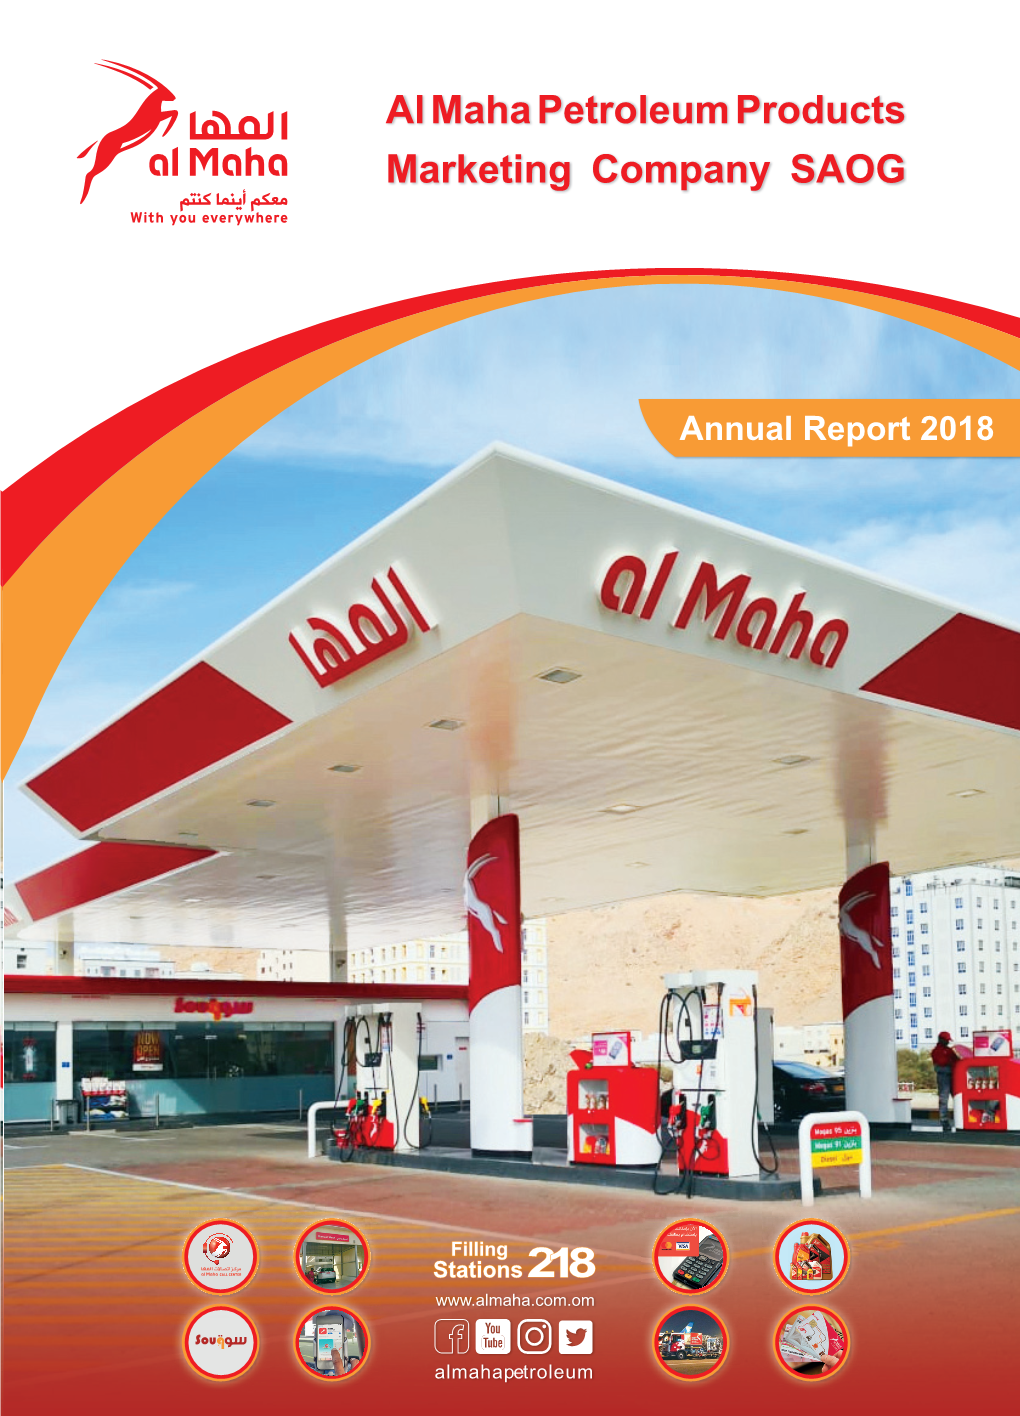 Al Maha Petroleum Products Marketing Company SAOG